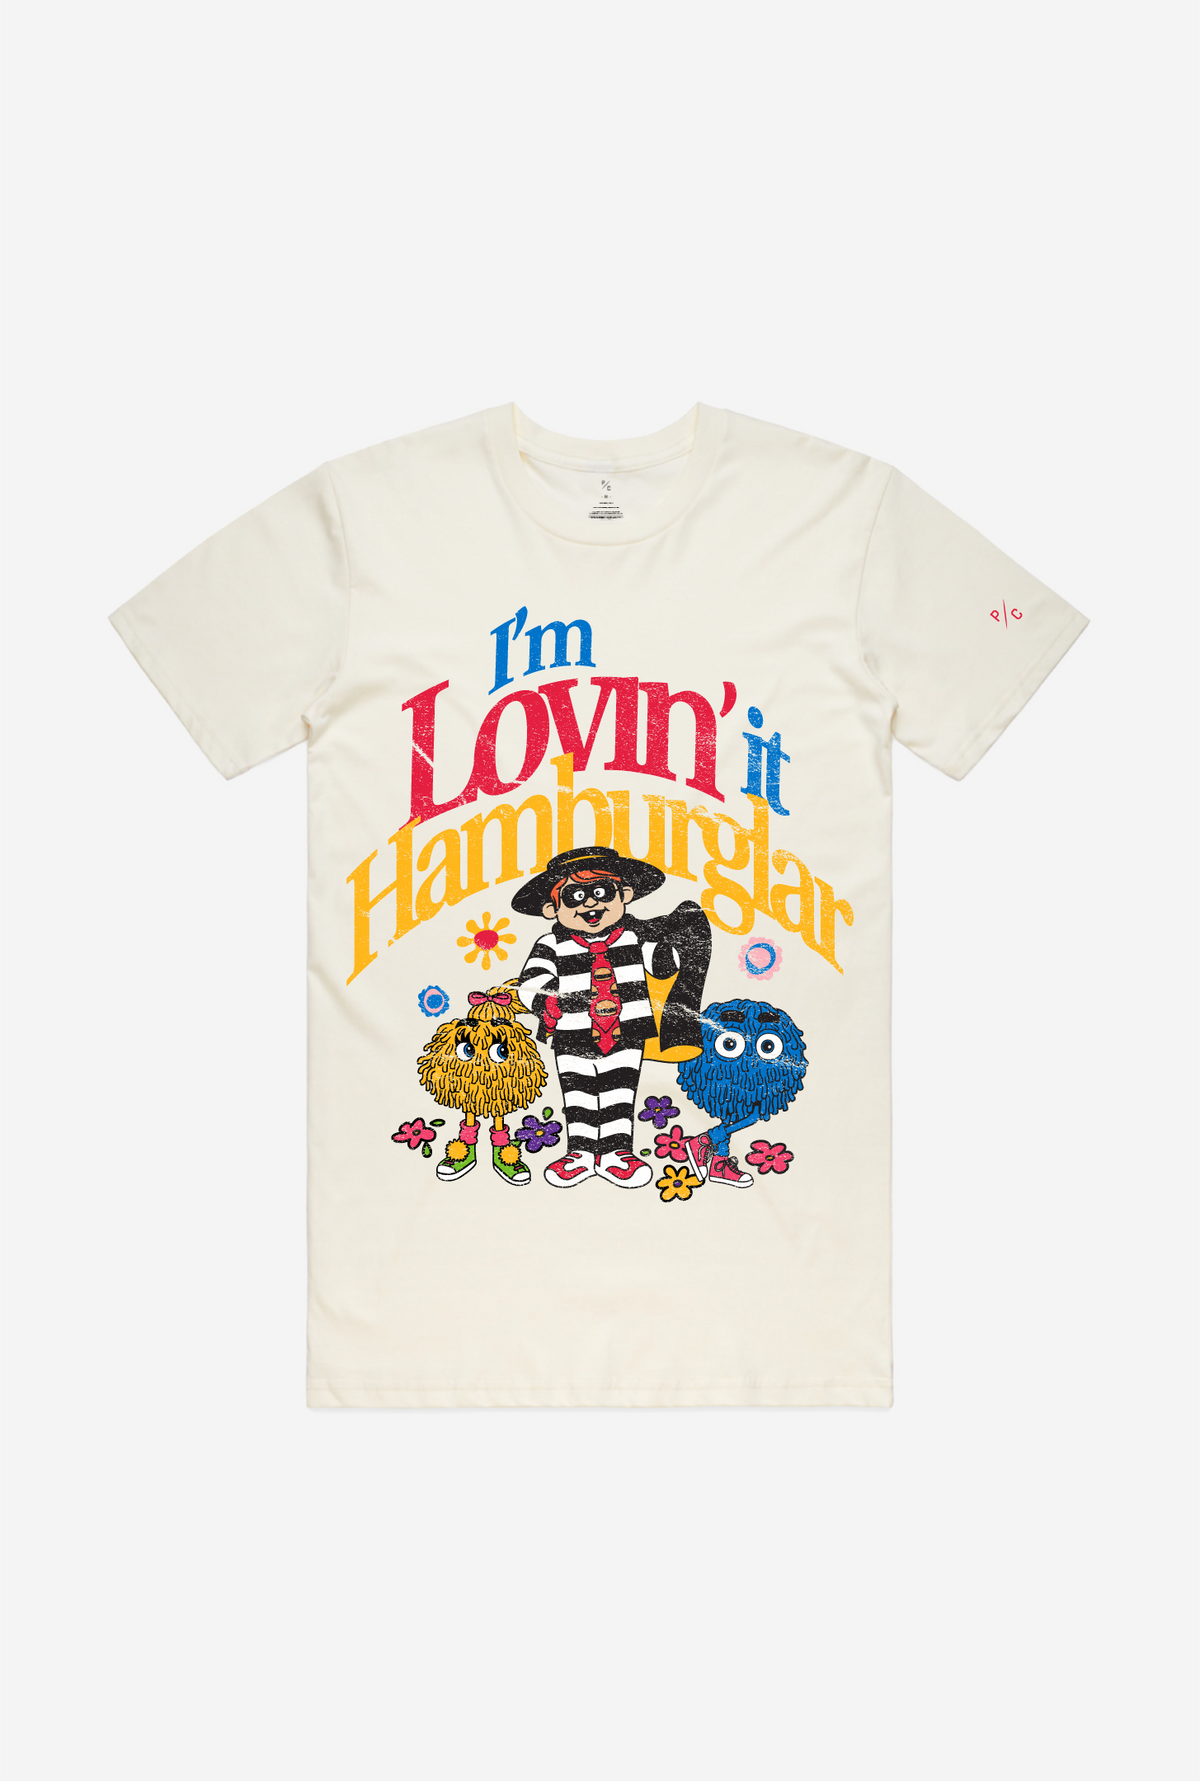 I'm Lovin' It Hamburglar T-Shirt - Ivory